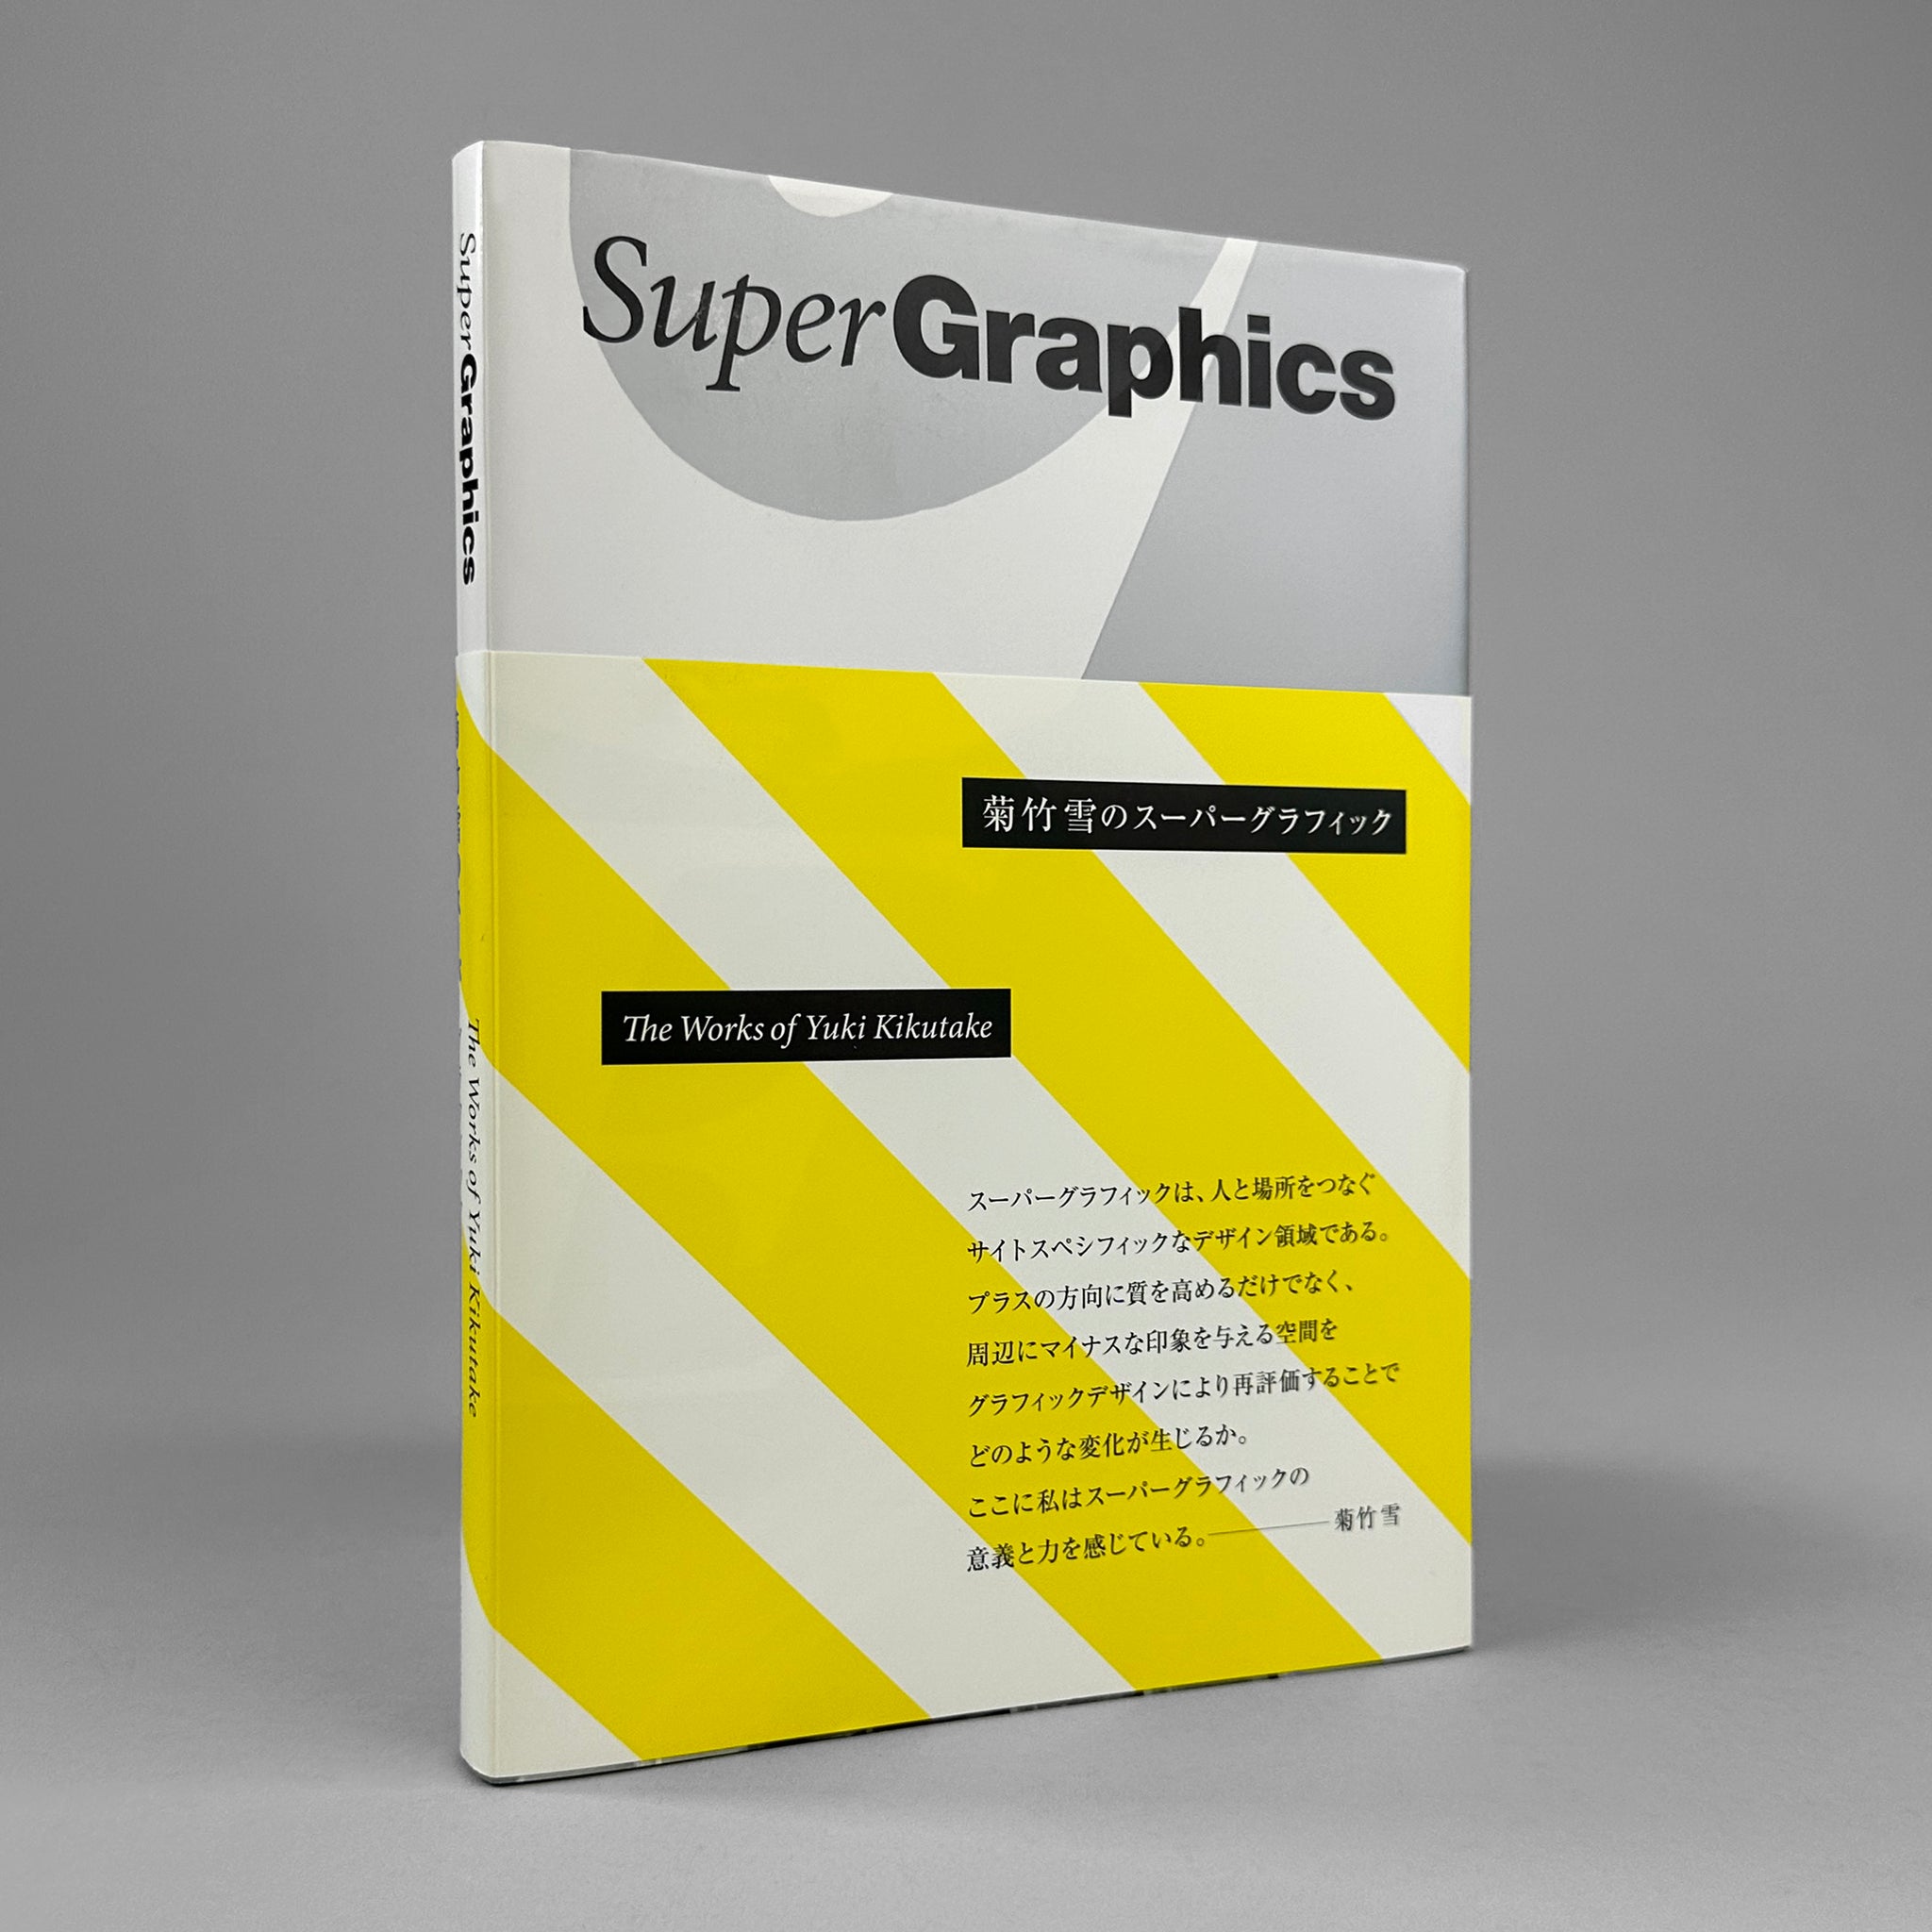 Super Graphics: The Works of Yuki Kikutake